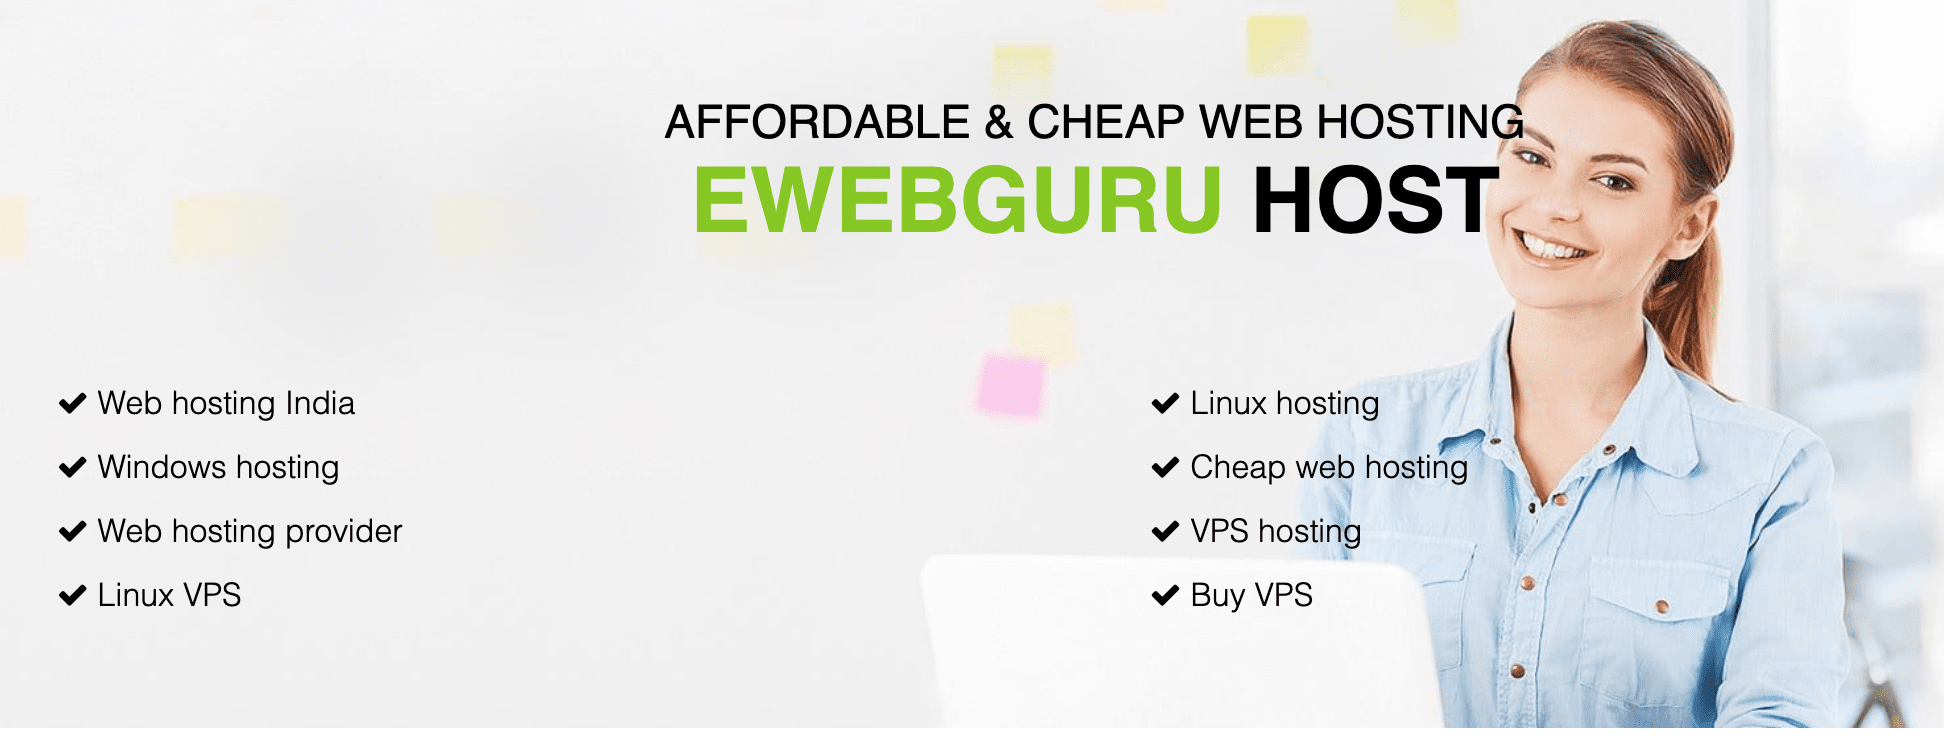 ewbguru Web Hosting